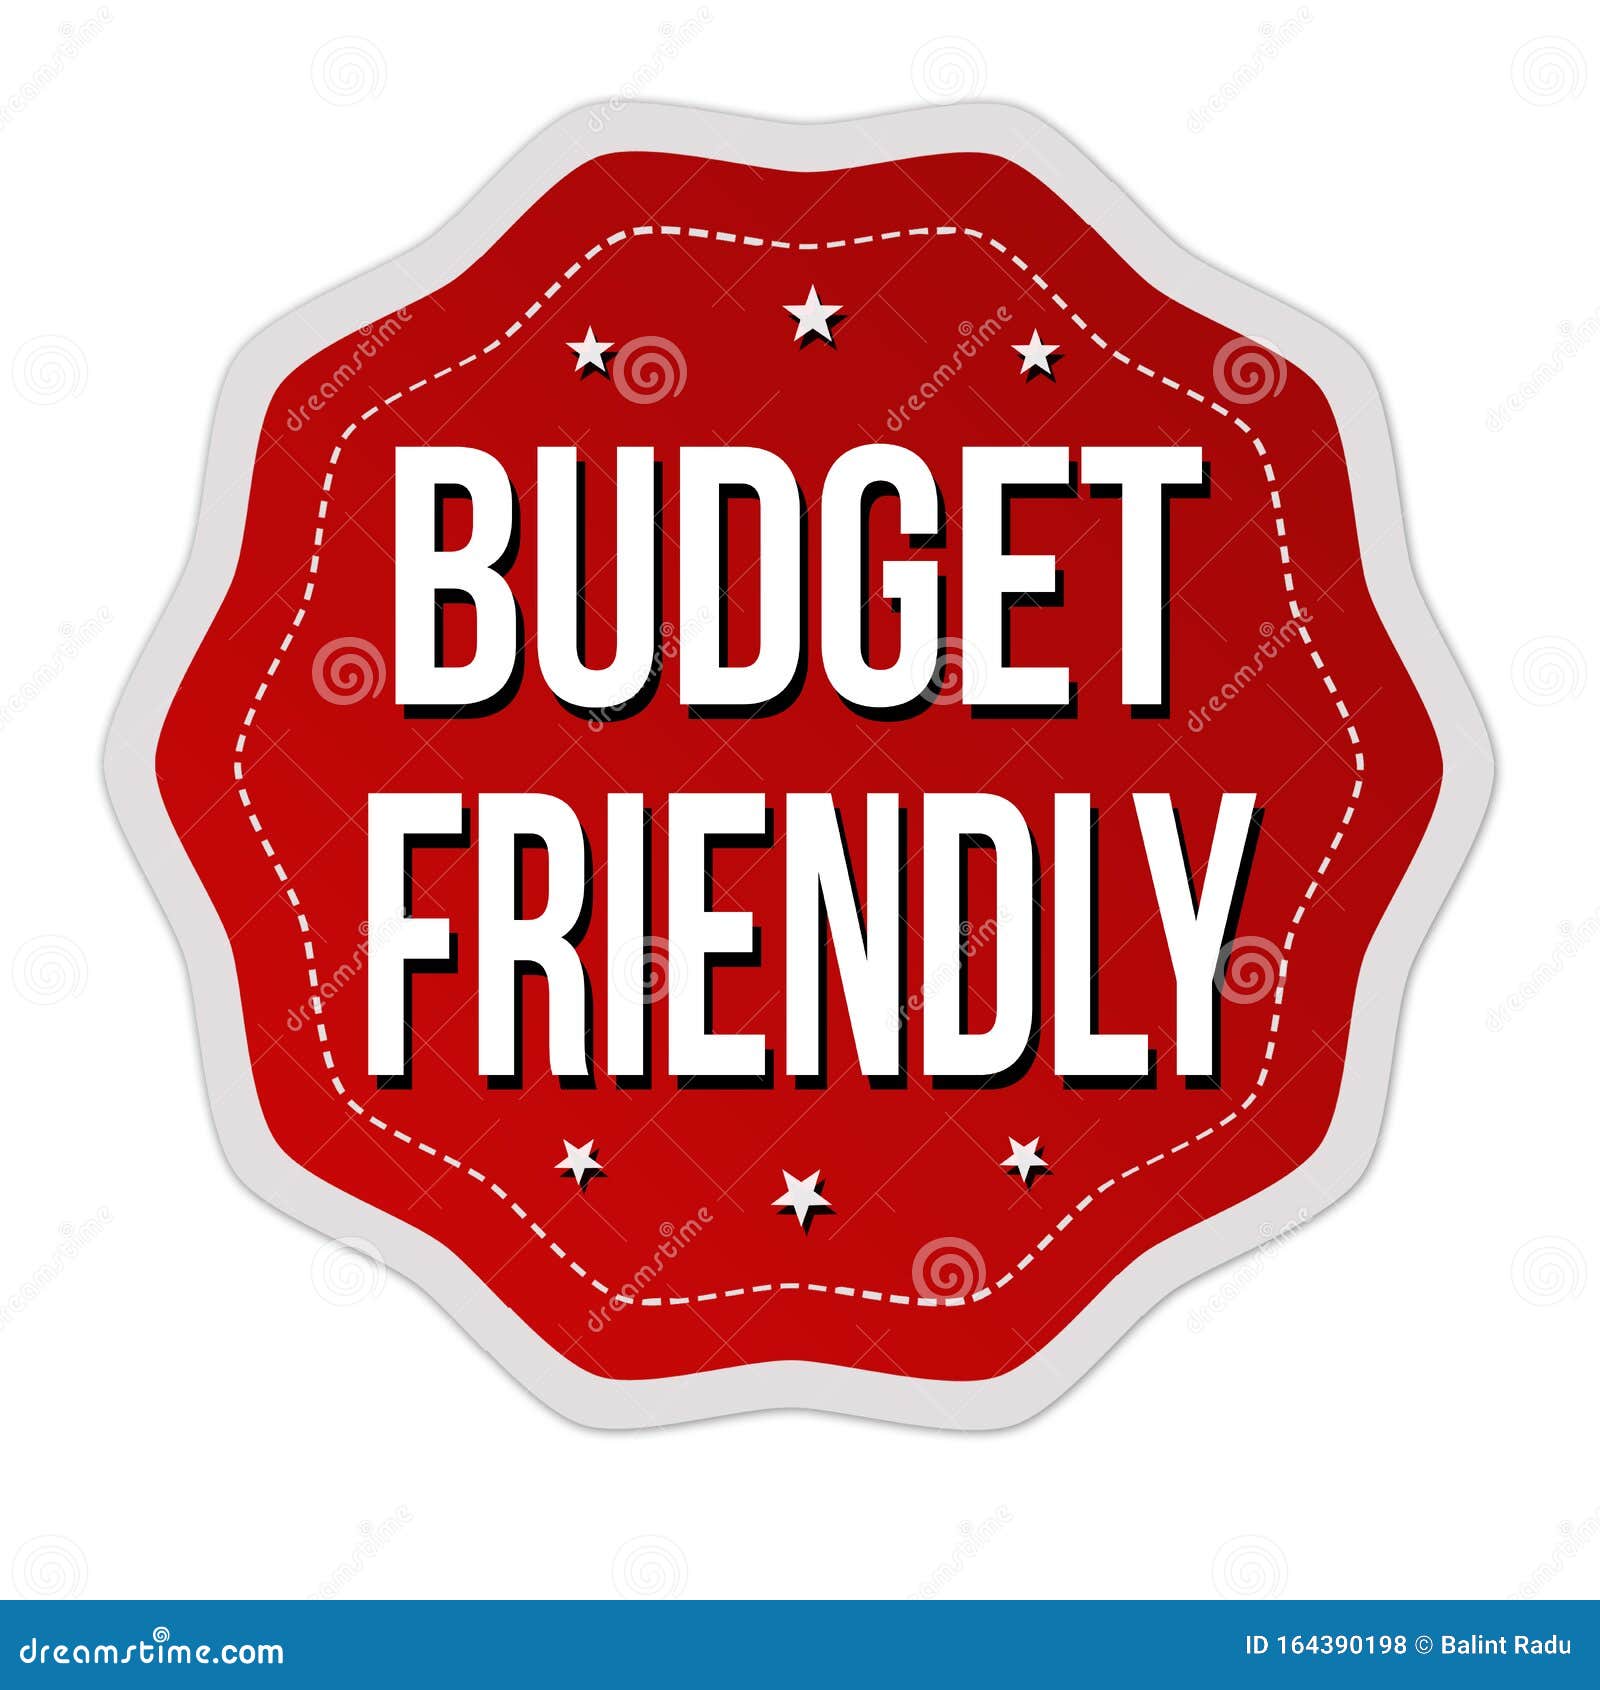 Budget-Friendly CRM